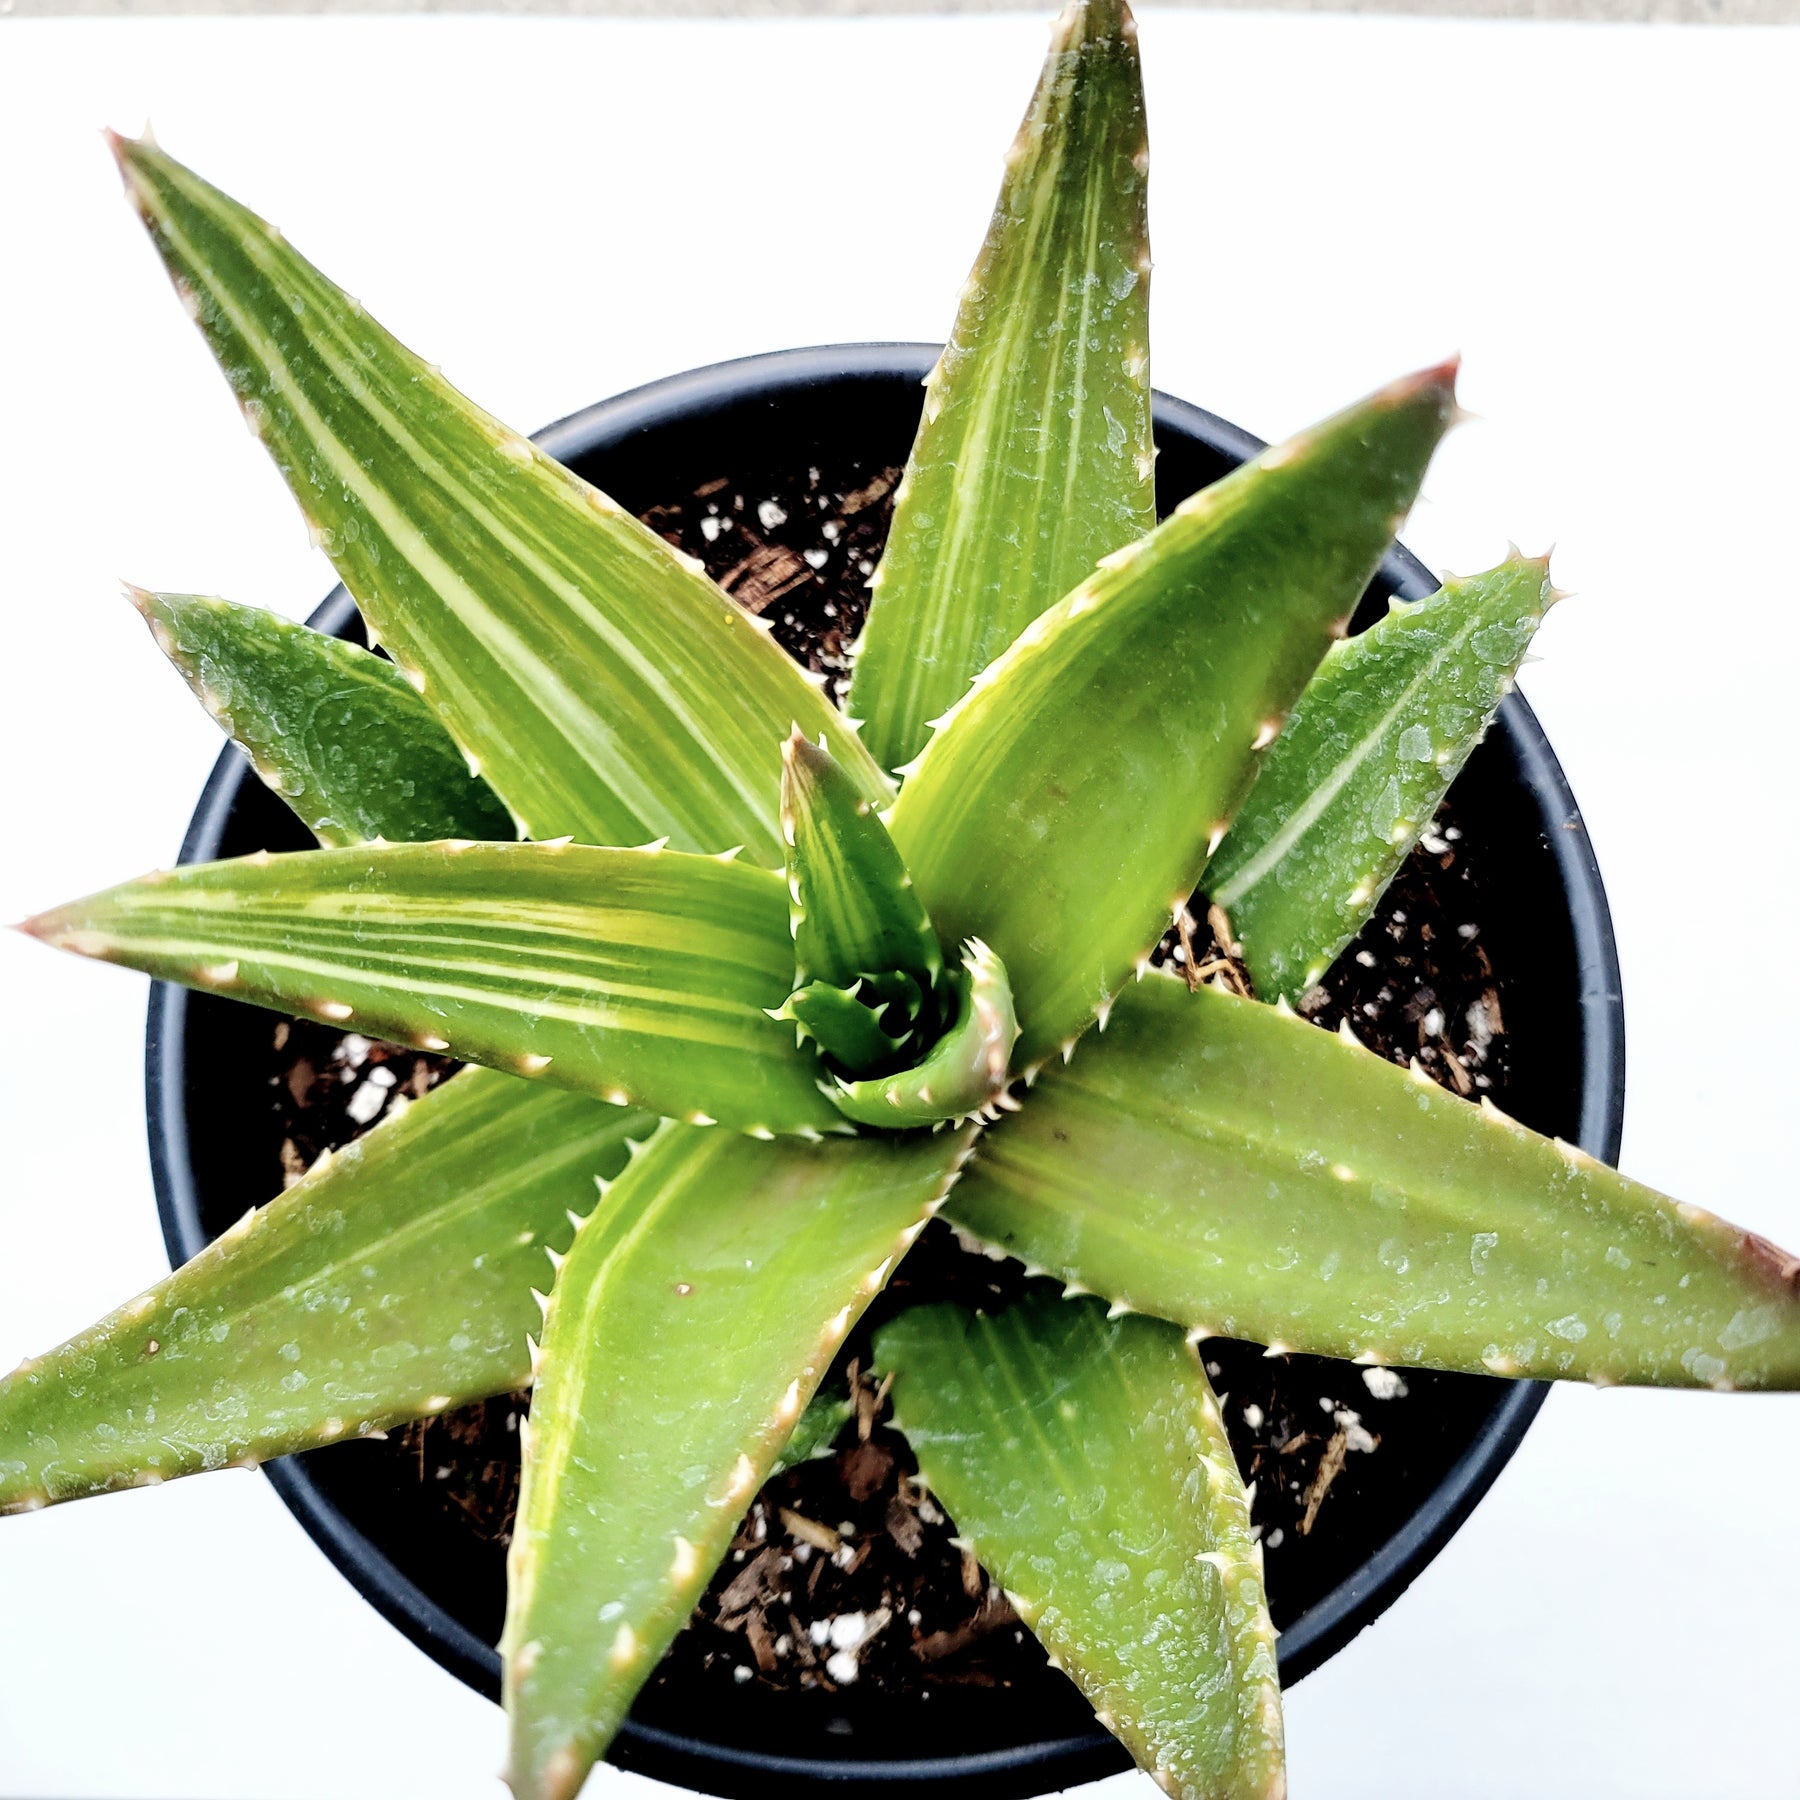 Aloe perfoliata - Mitre Aloe, Rubble Aloe